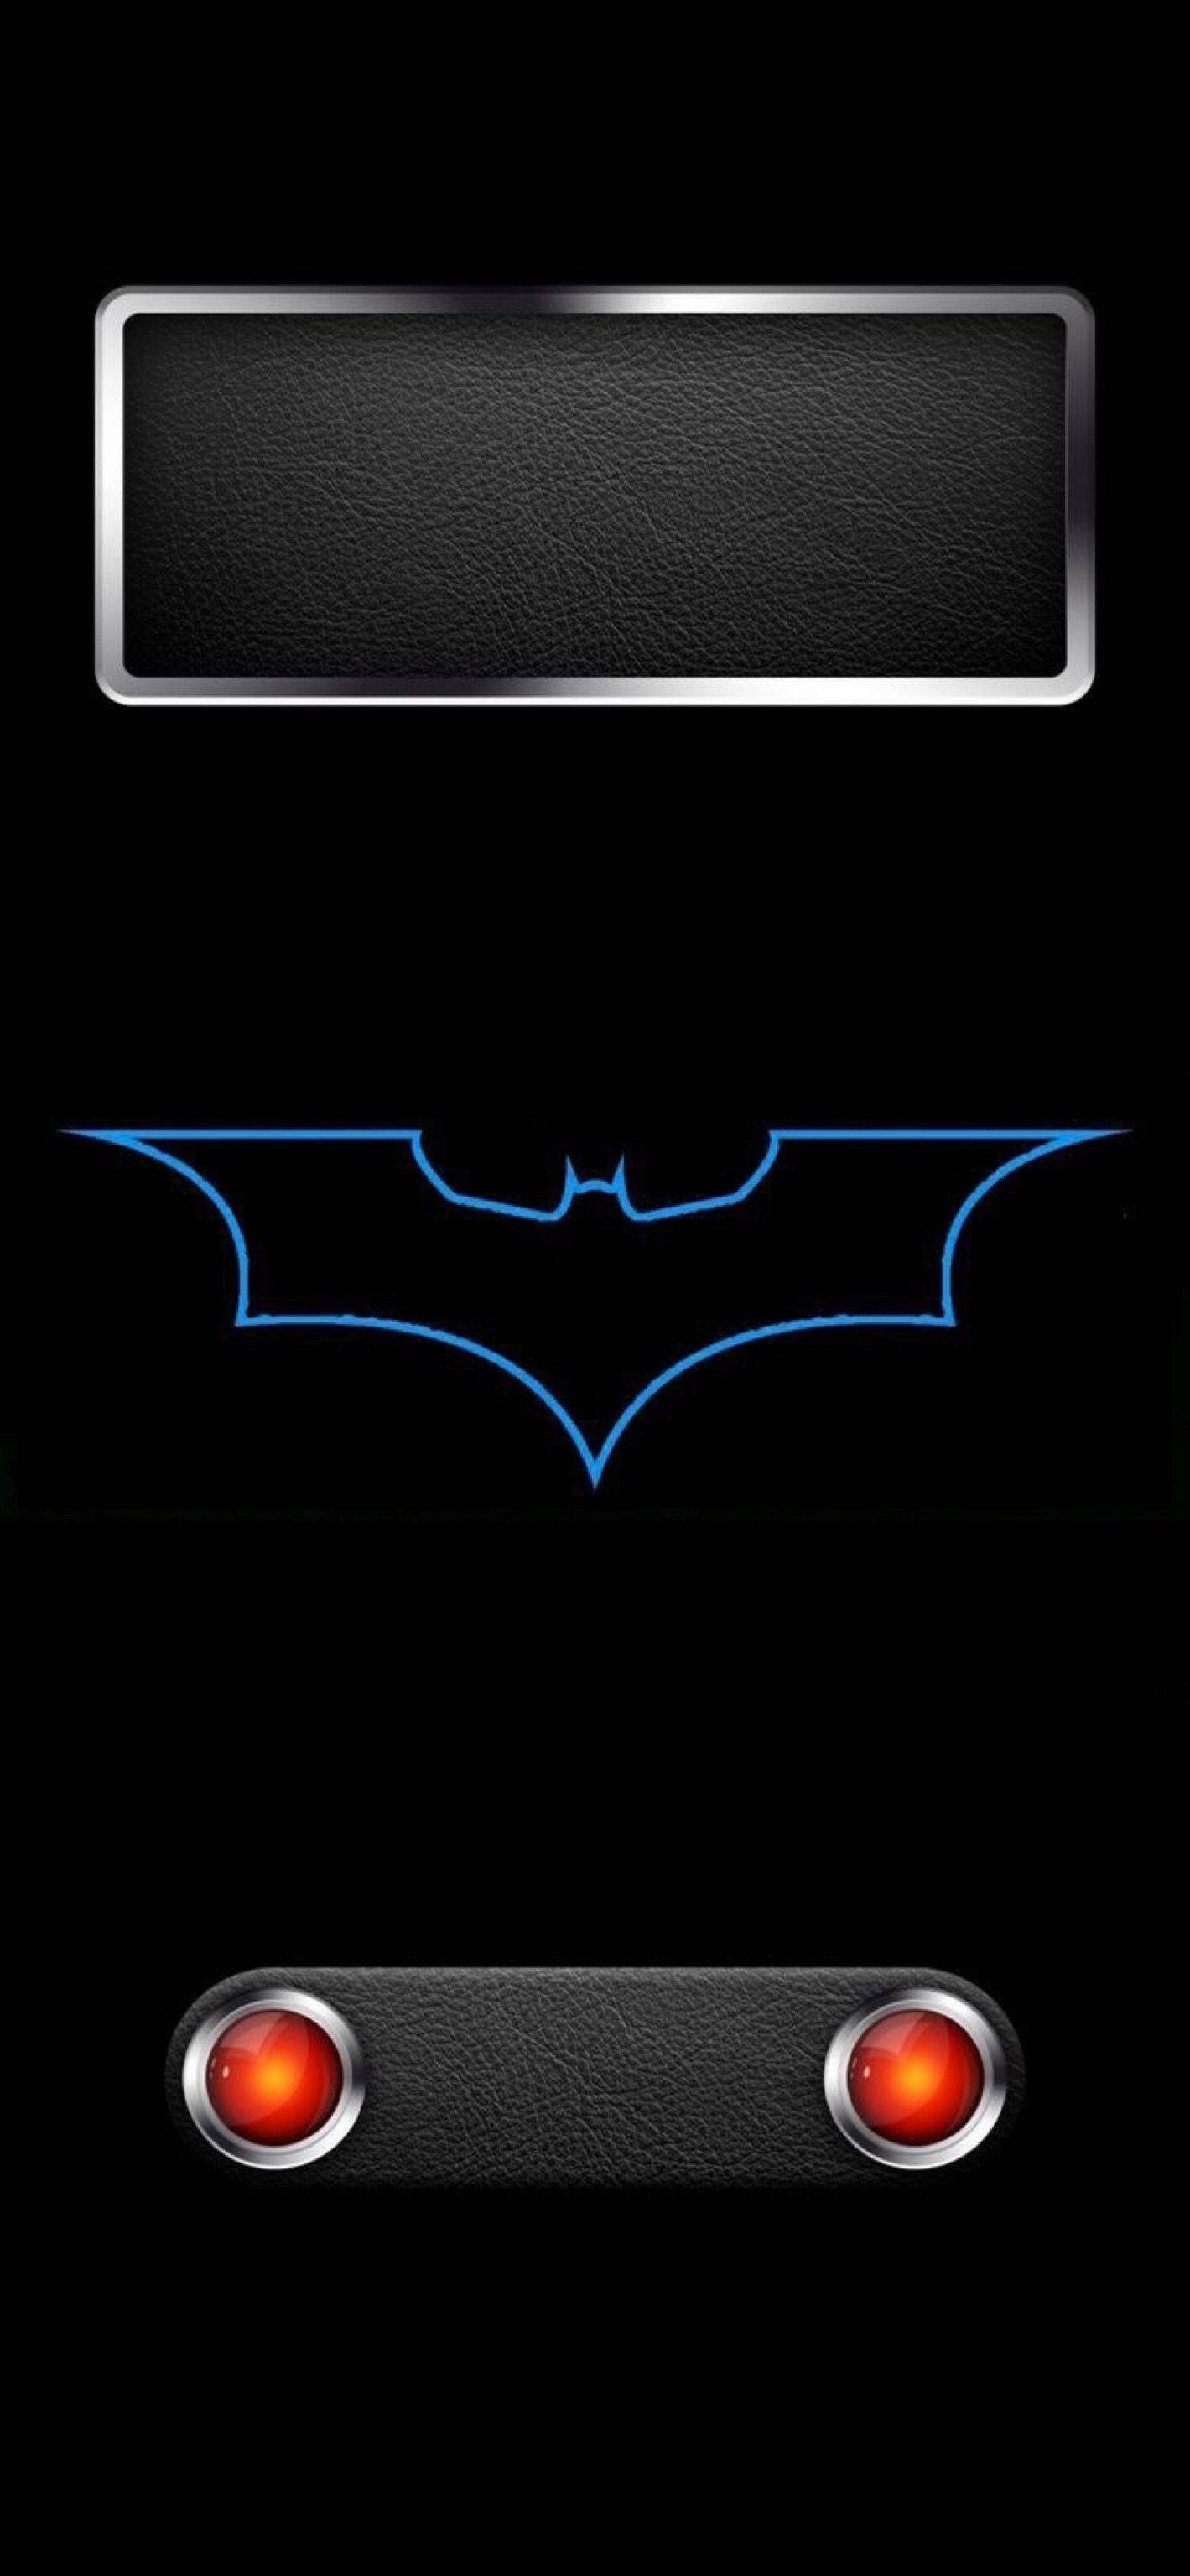 Batman Print iPhone X tapet - ja til dette klassiske tapet i sort og hvid. Wallpaper